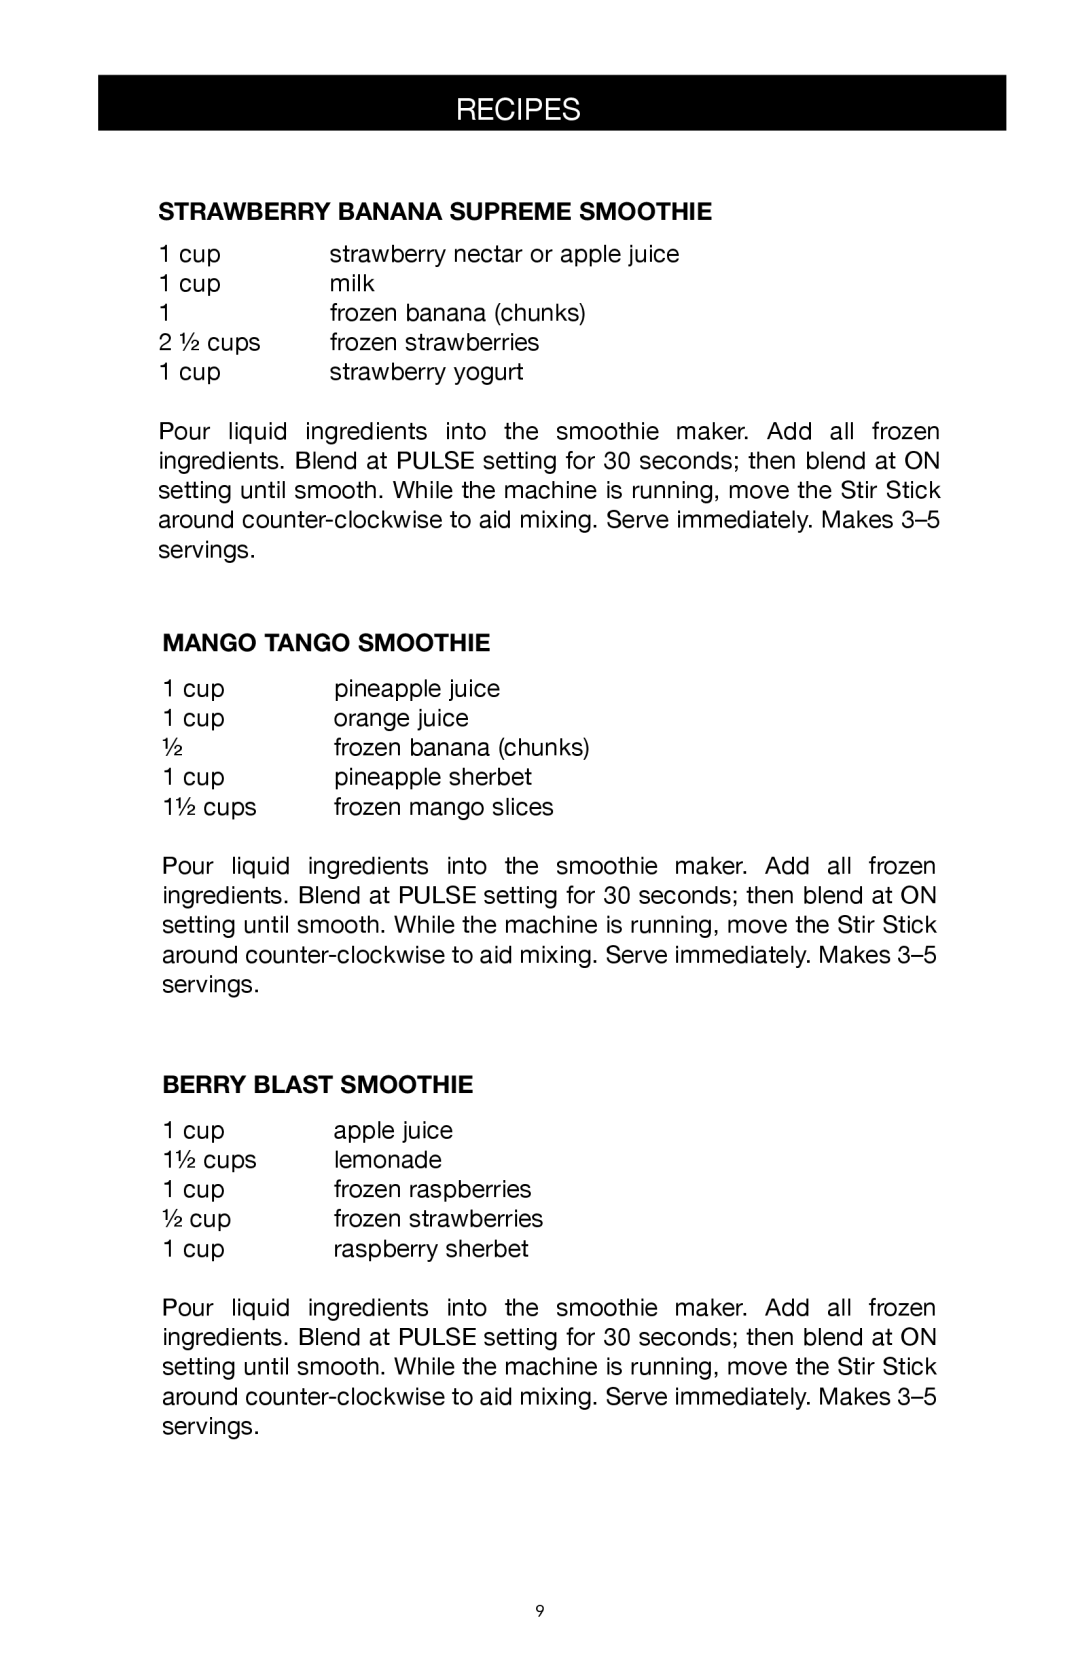 West Bend Back to Basics SUP400BINST manual Recipes, Strawberry Banana Supreme Smoothie, Mango Tango Smoothie 